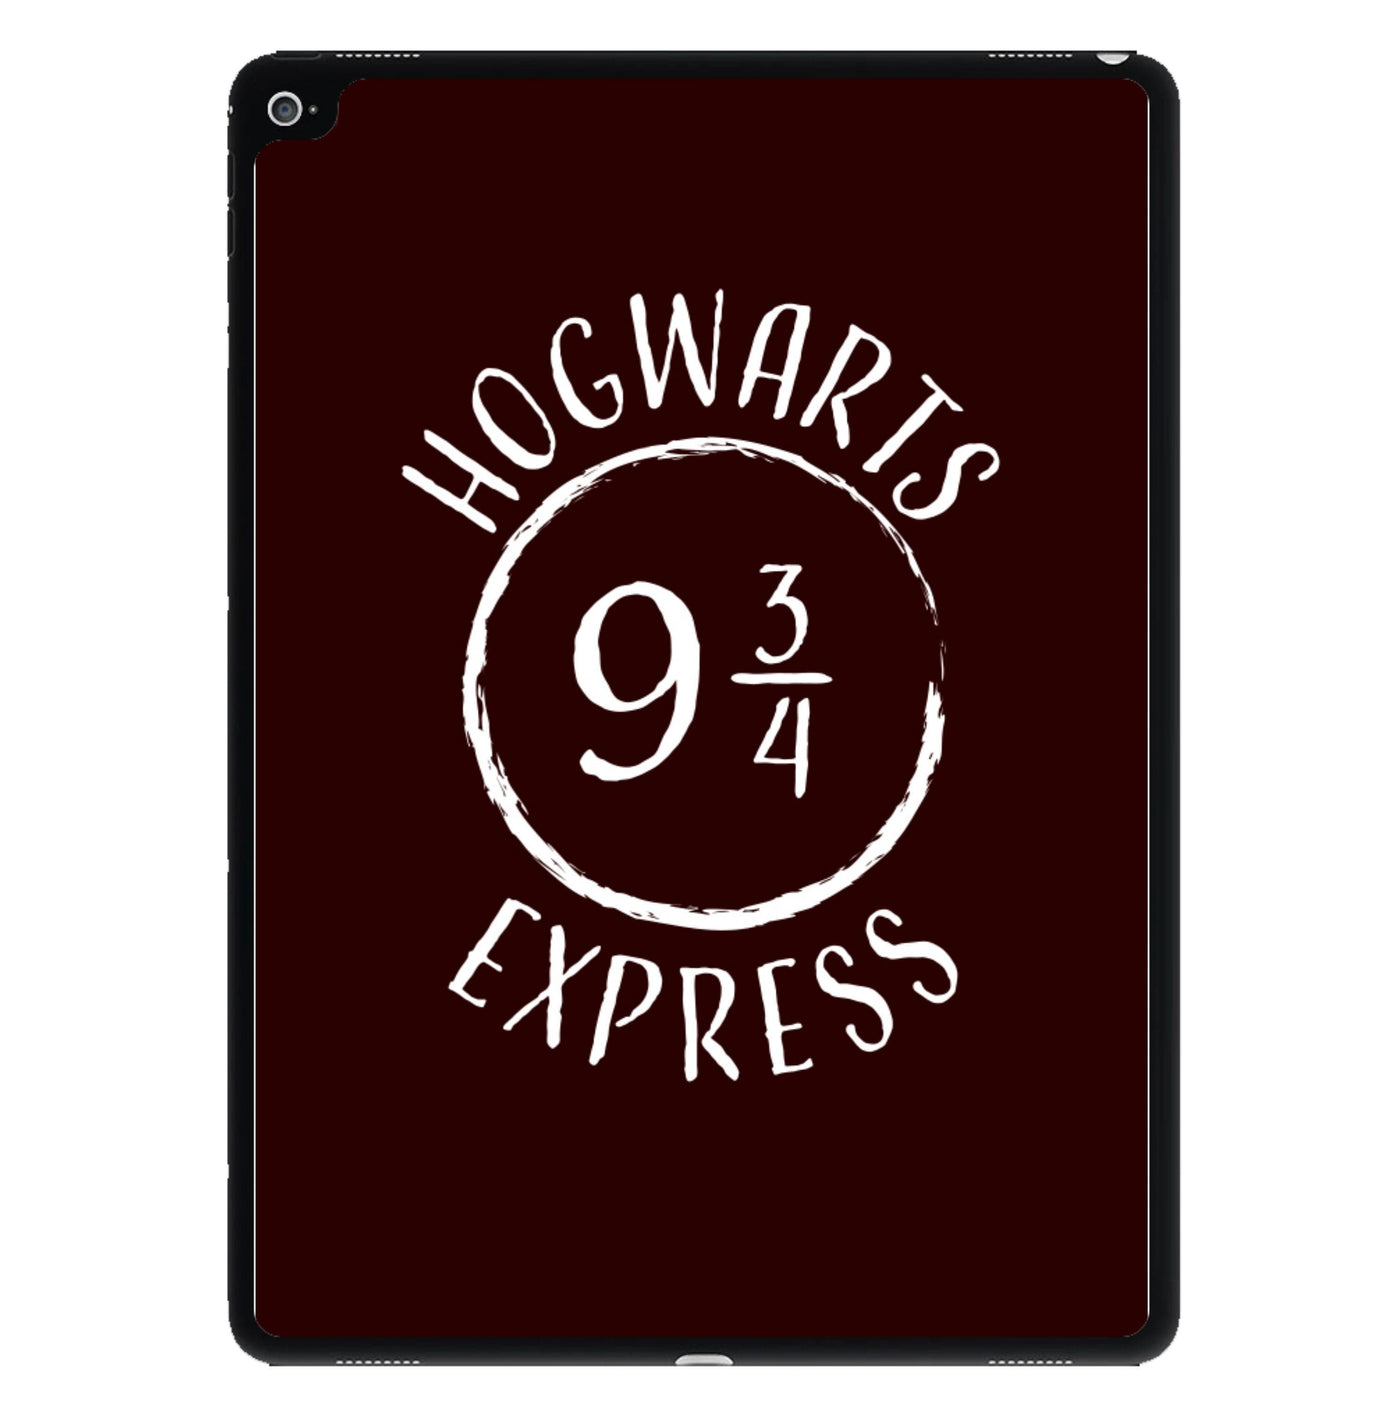 Hogwarts Express - Harry Potter iPad Case